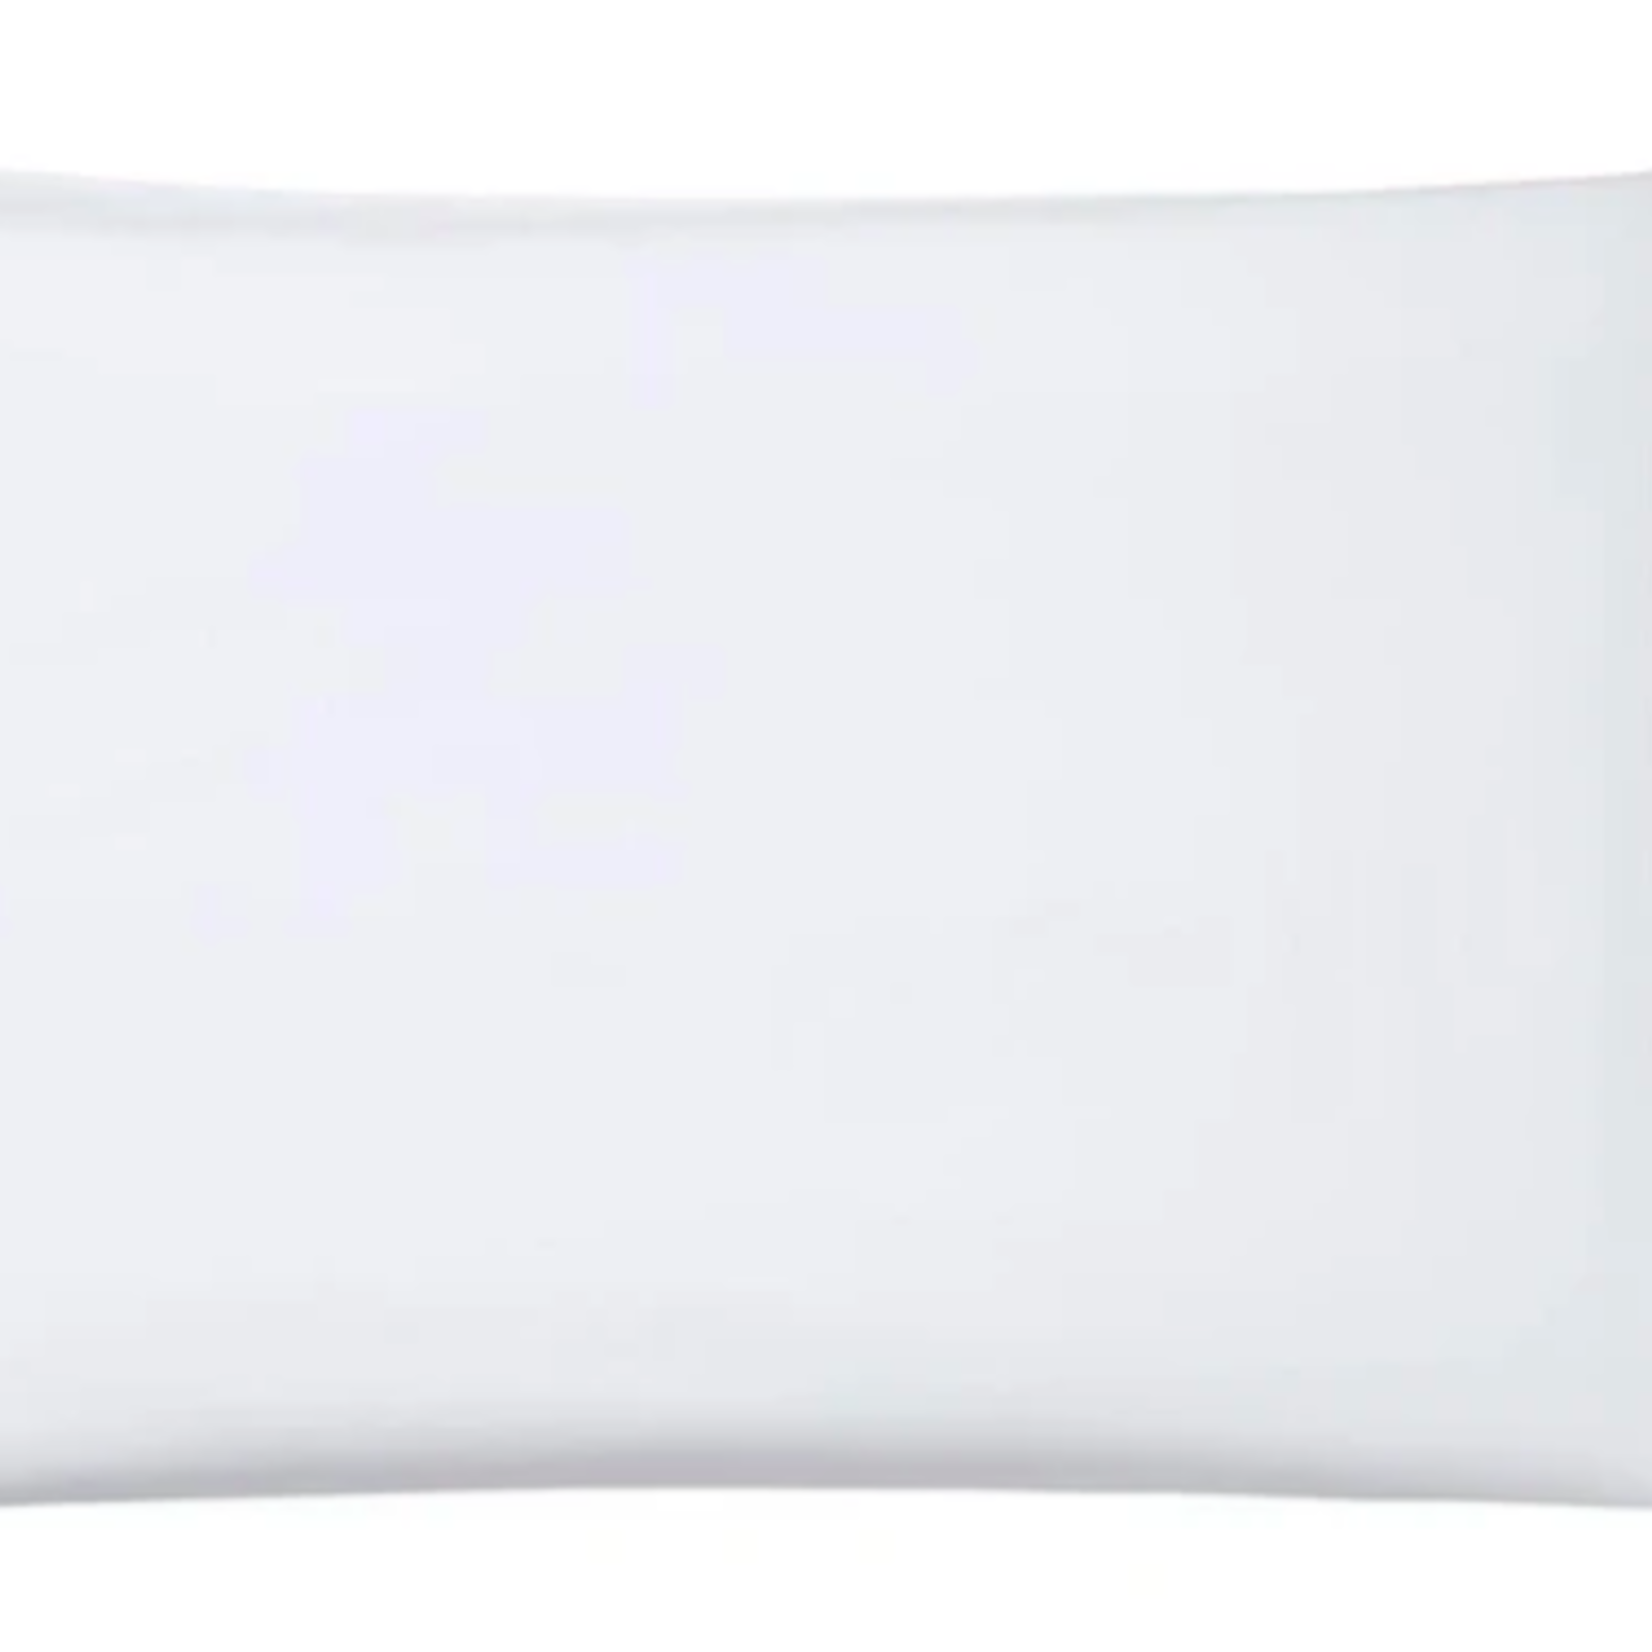 Sferra Giza 45 Percale Pillowcases, Pair, White, Standard